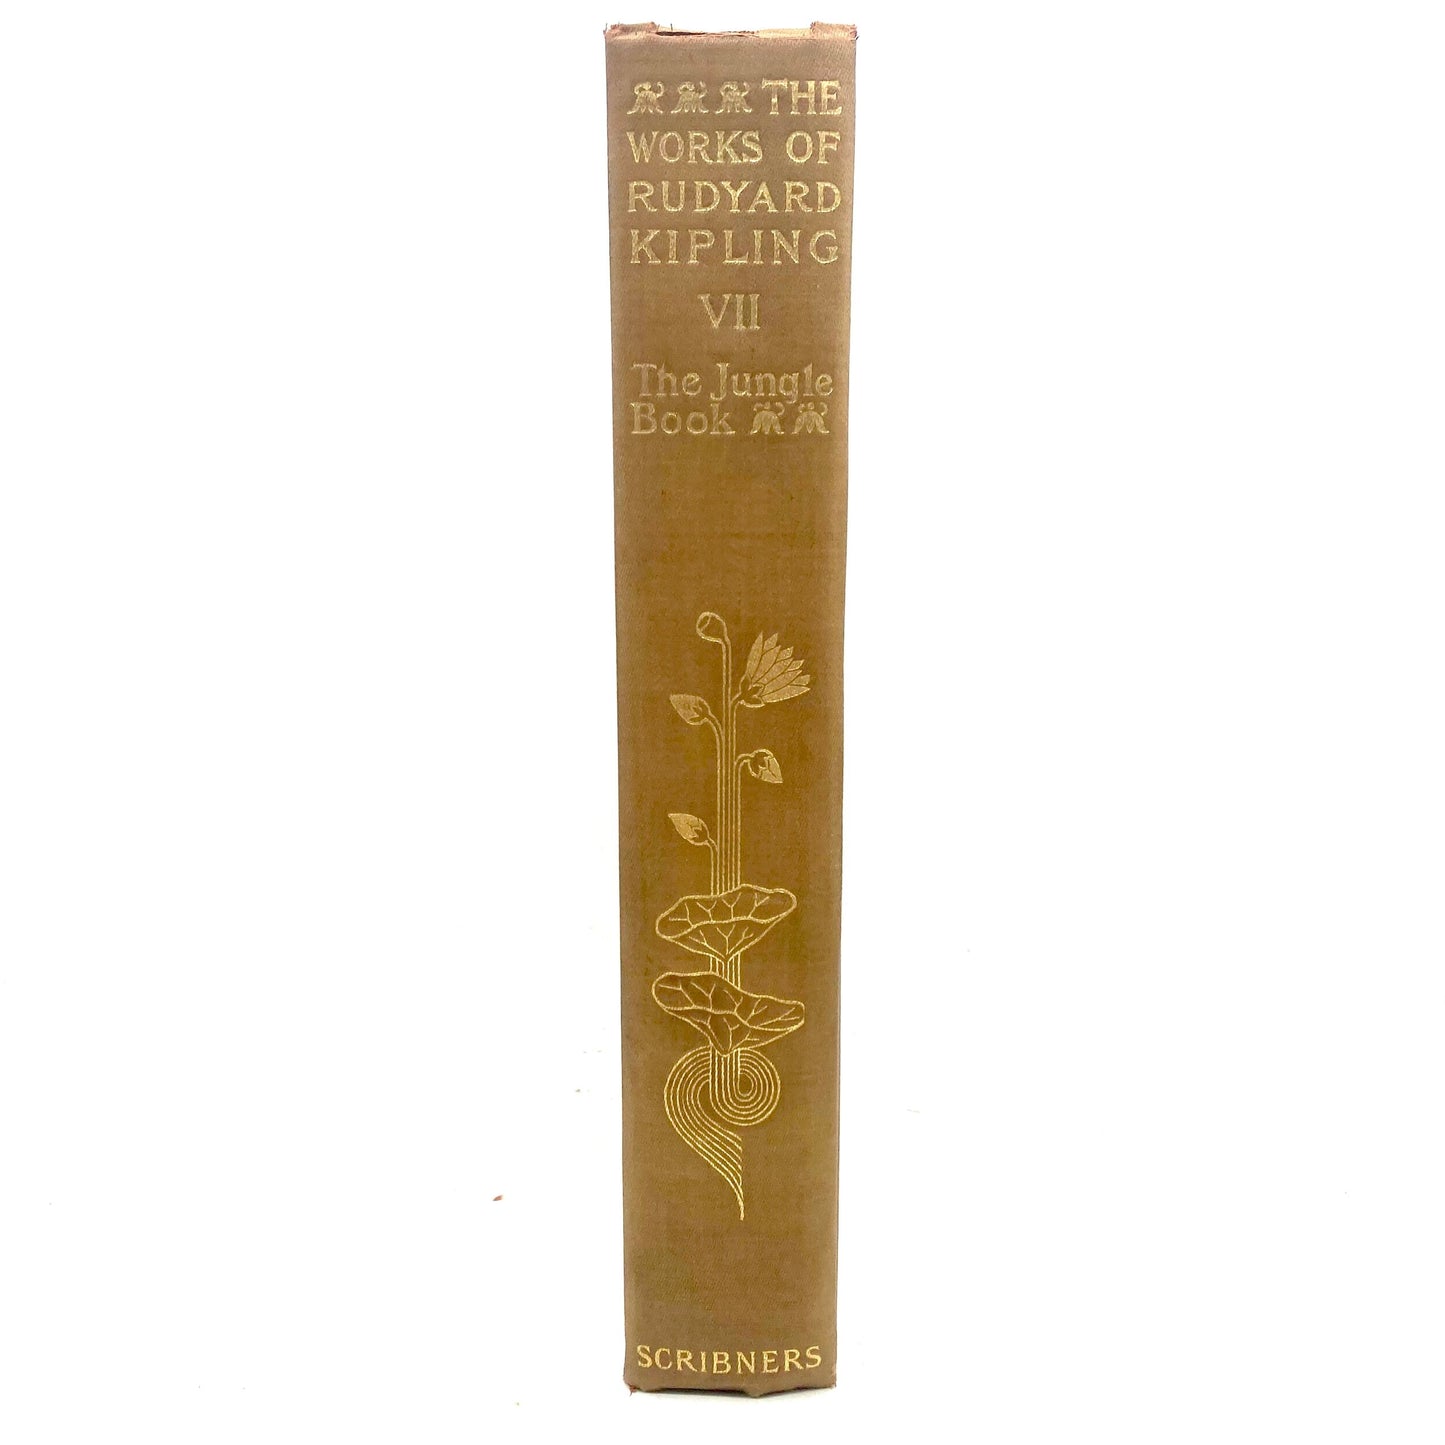 KIPLING, Rudyard "The Jungle Book" [Scribners, 1897] - Buzz Bookstore